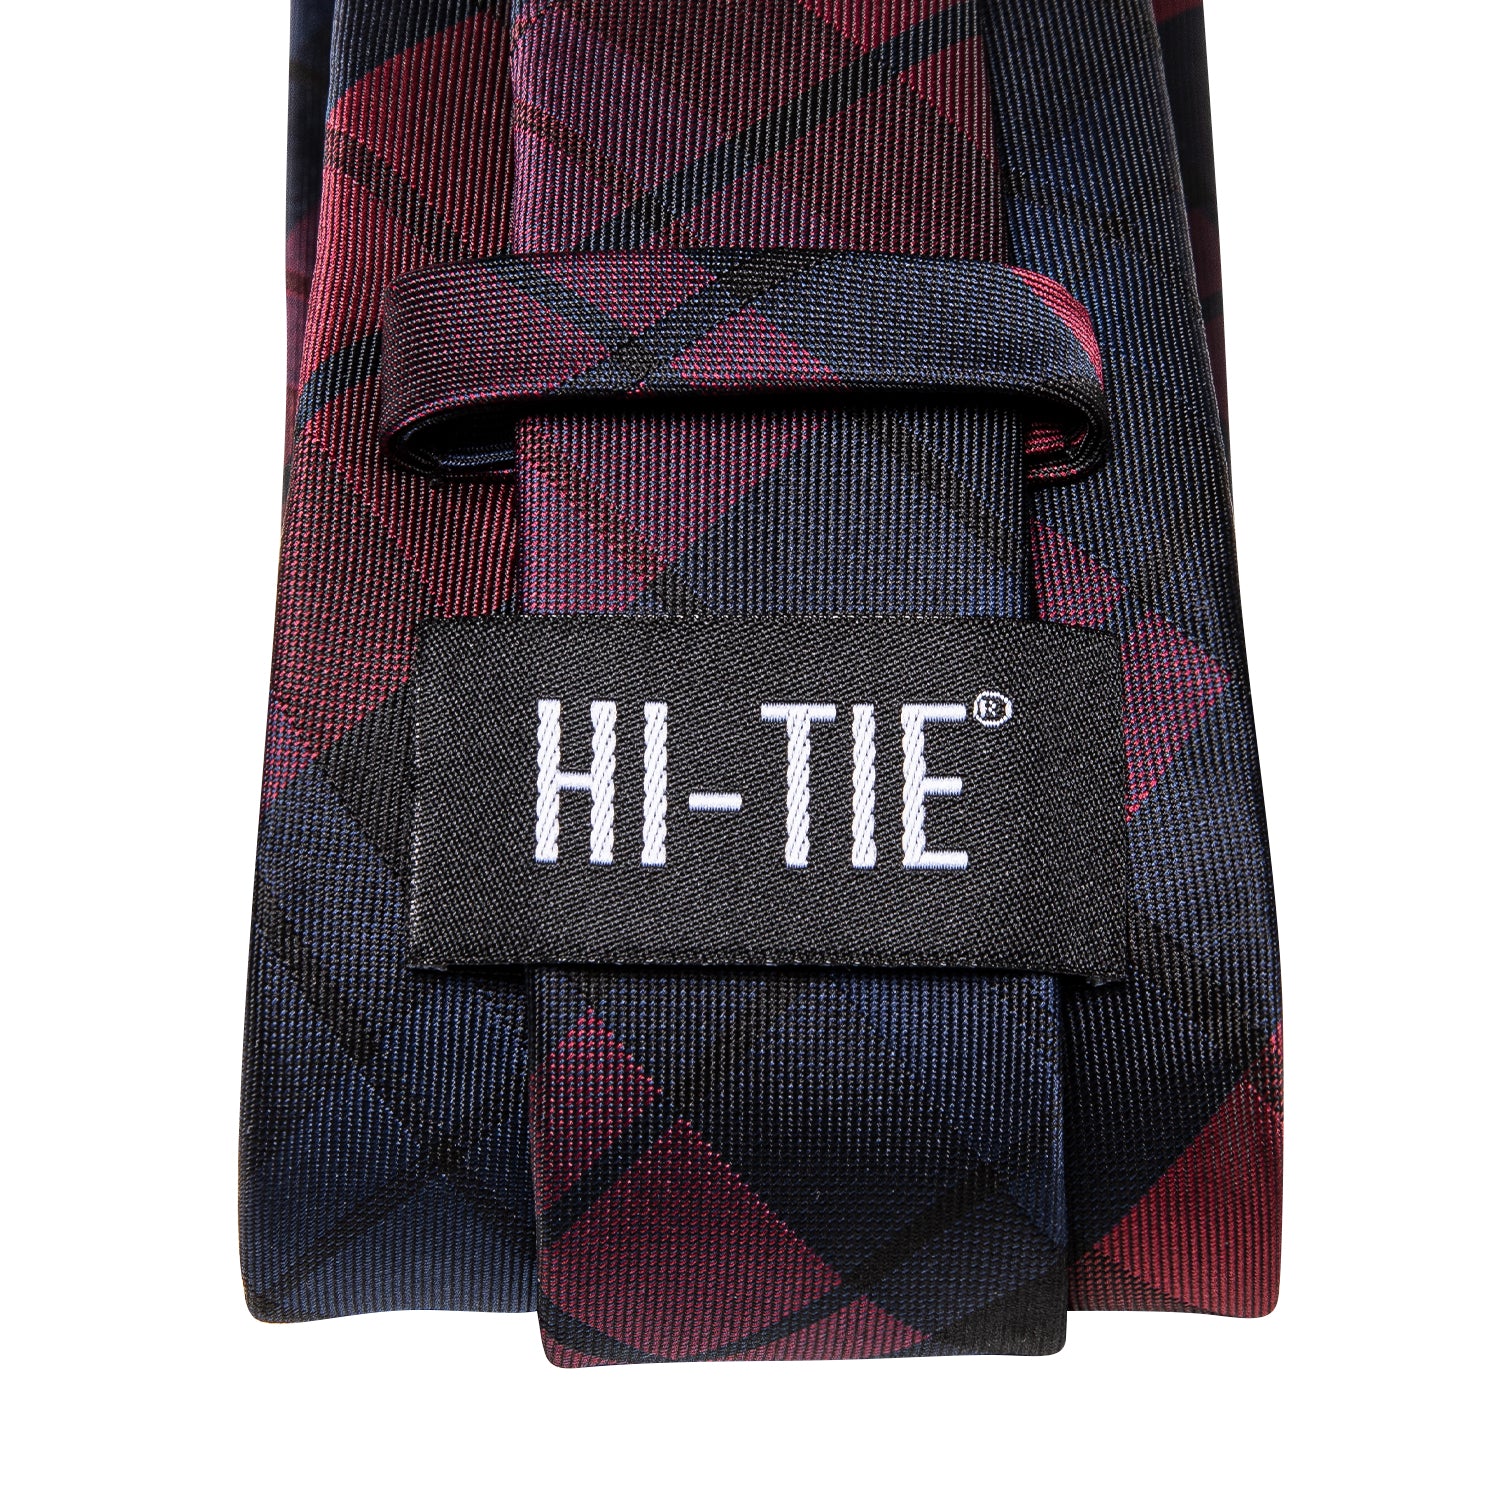 Classic Red Blue Plaid Tie Pocket Square Cufflinks Set